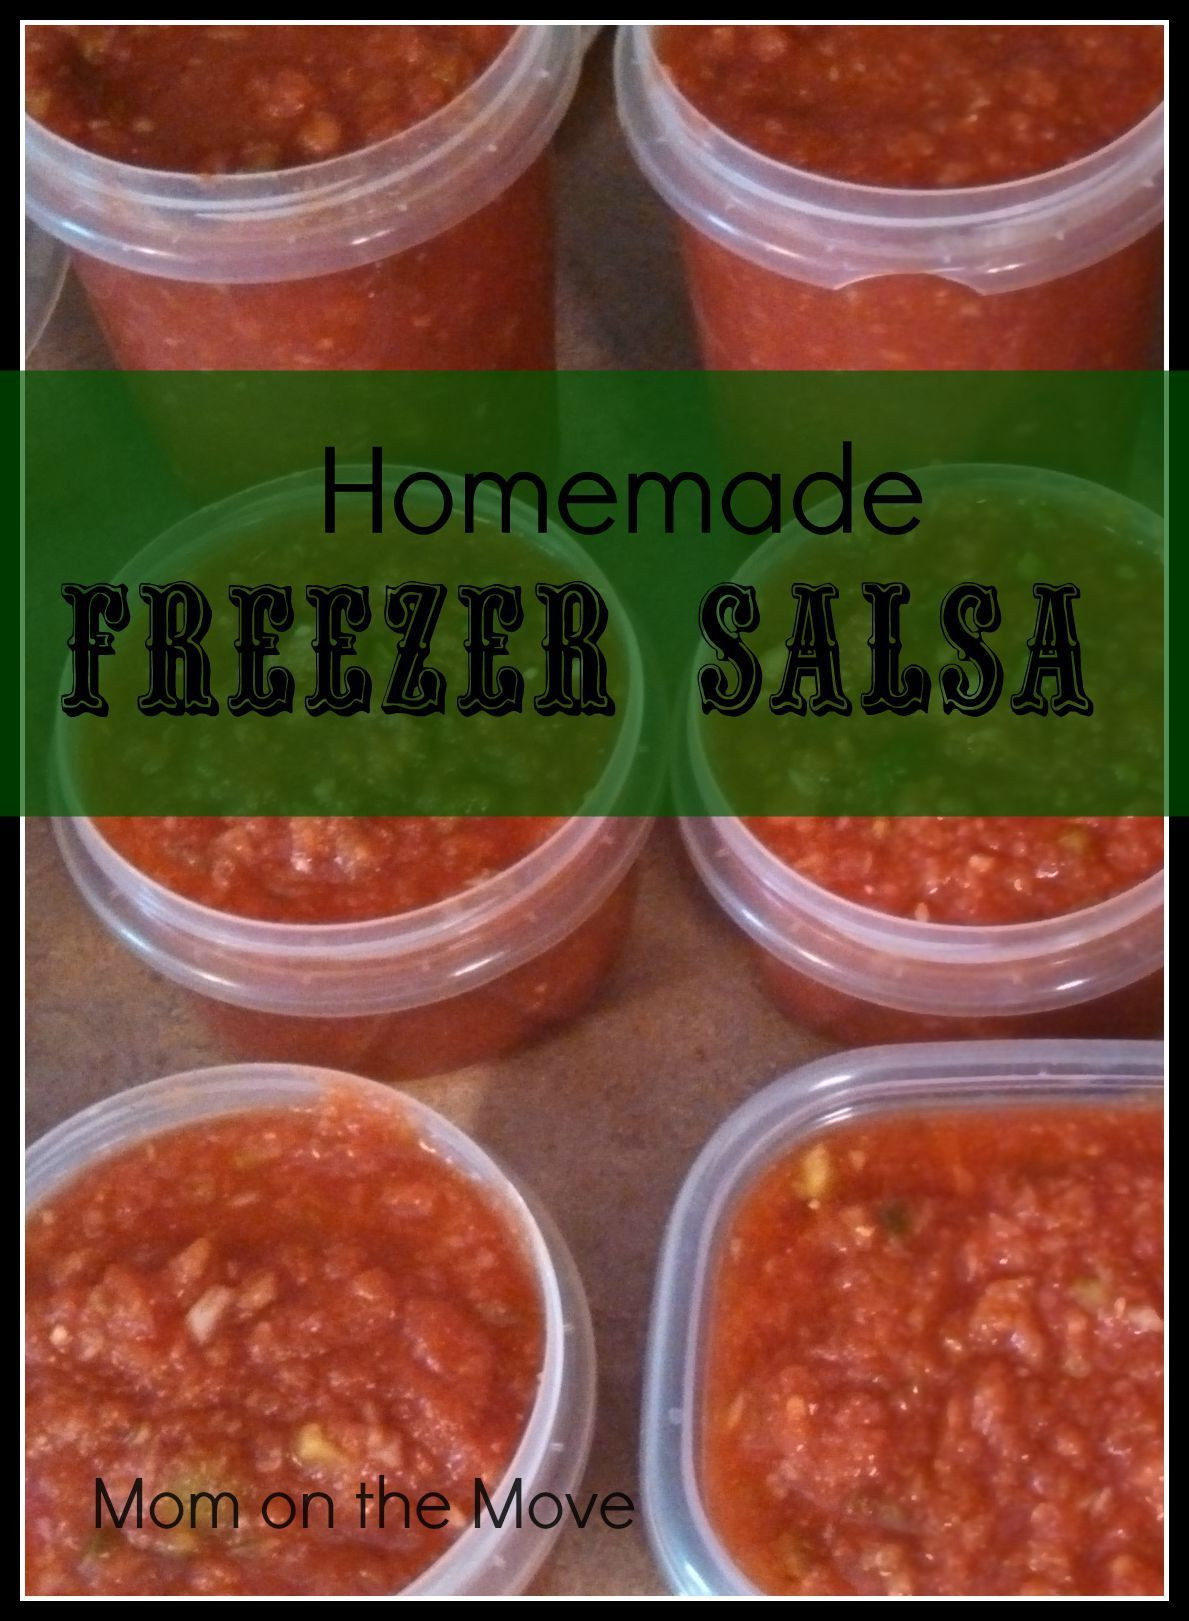 Freezer Salsa Recipe With Fresh Tomatoes
 Homemade Freezer Salsa